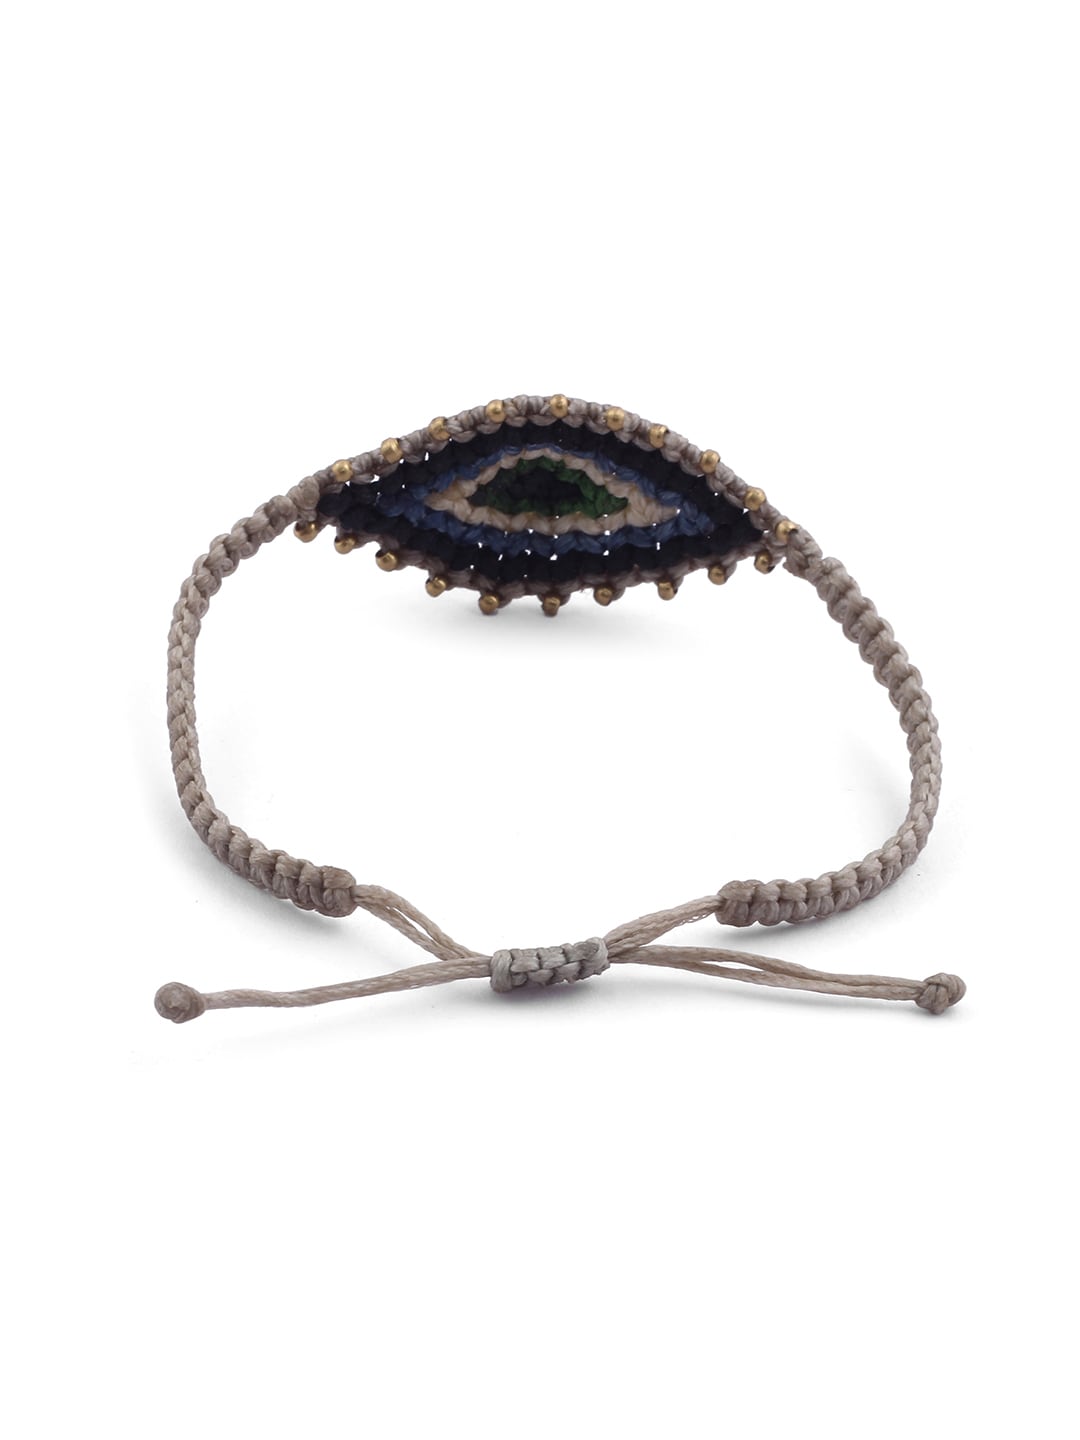 EL REGALO Men Grey & Blue Handcrafted Charm Bracelet - for Men
Style ID: 17157492